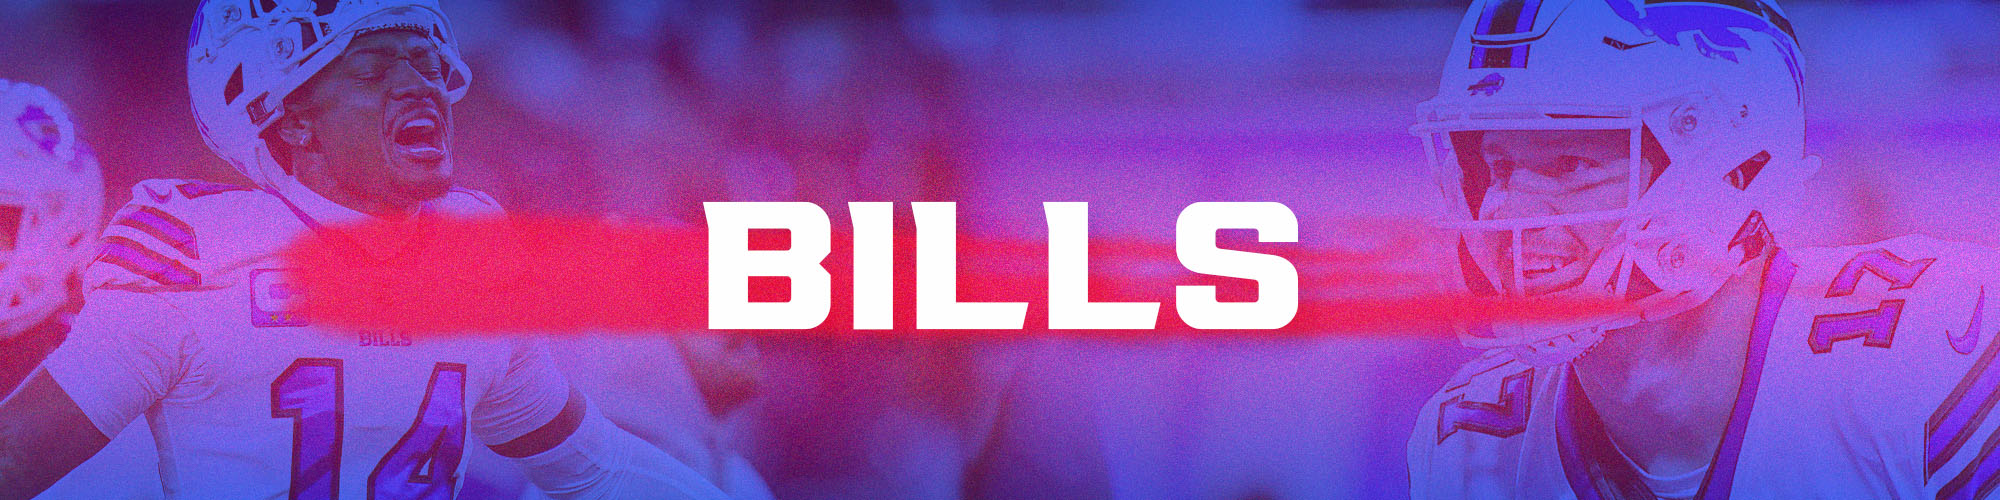 buffalo bills schedule games